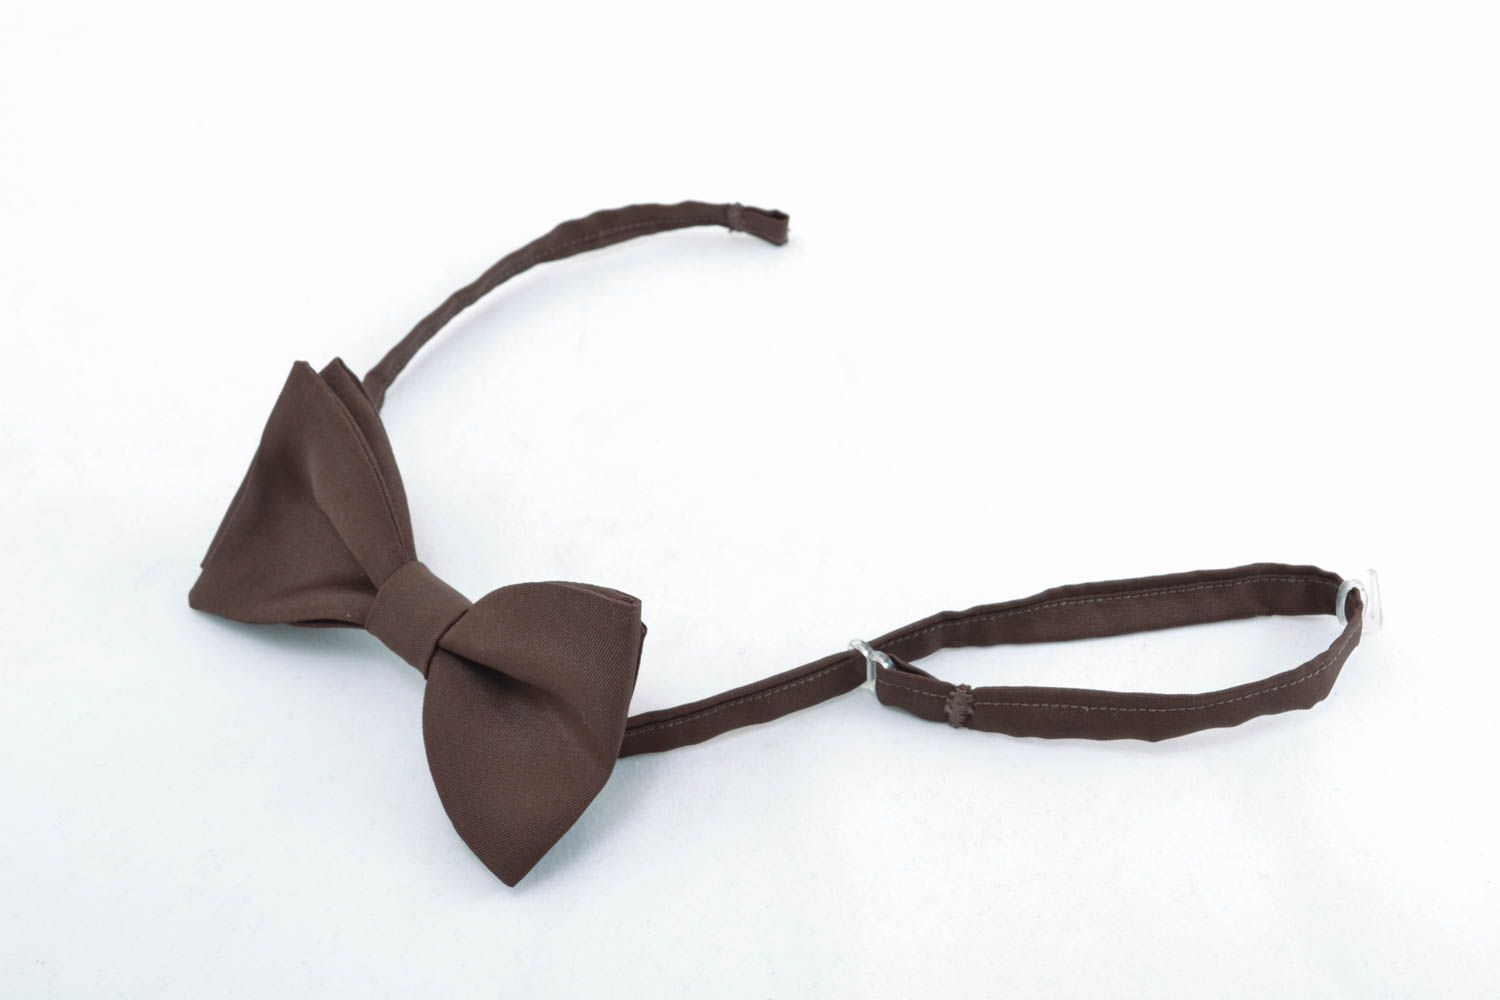 Unusual bow tie of brown color photo 1